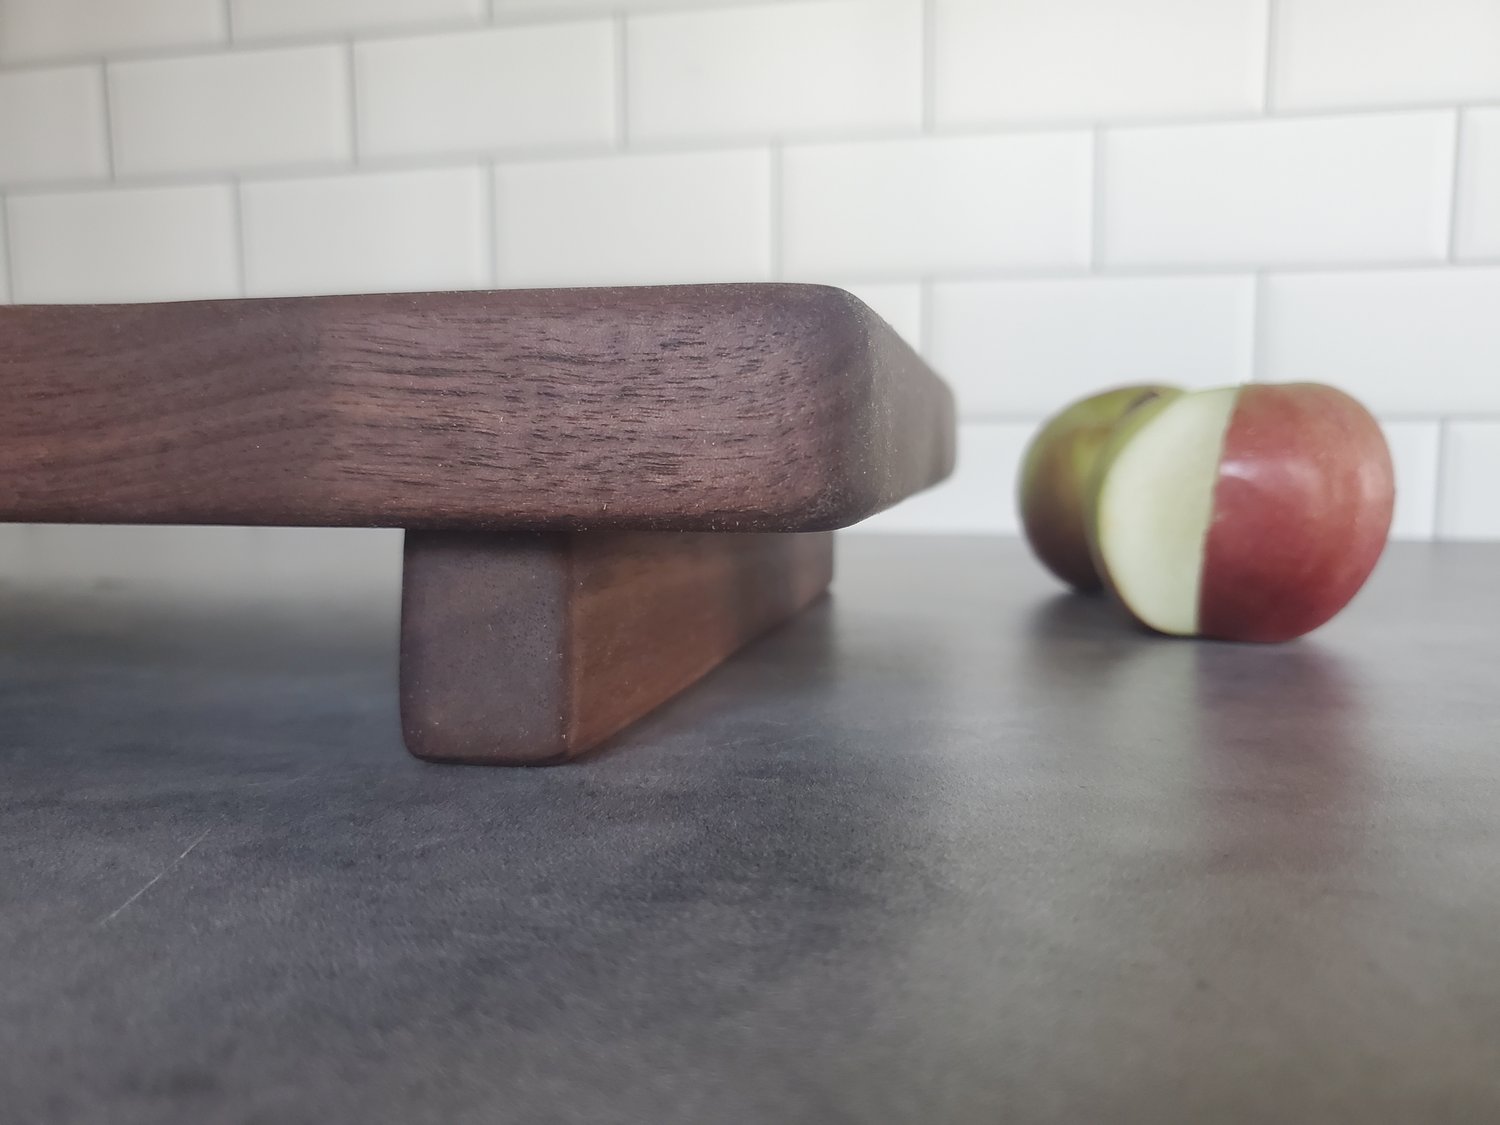 Corner cutting board, Kitchen cutting board, kitchen gift, unique board.